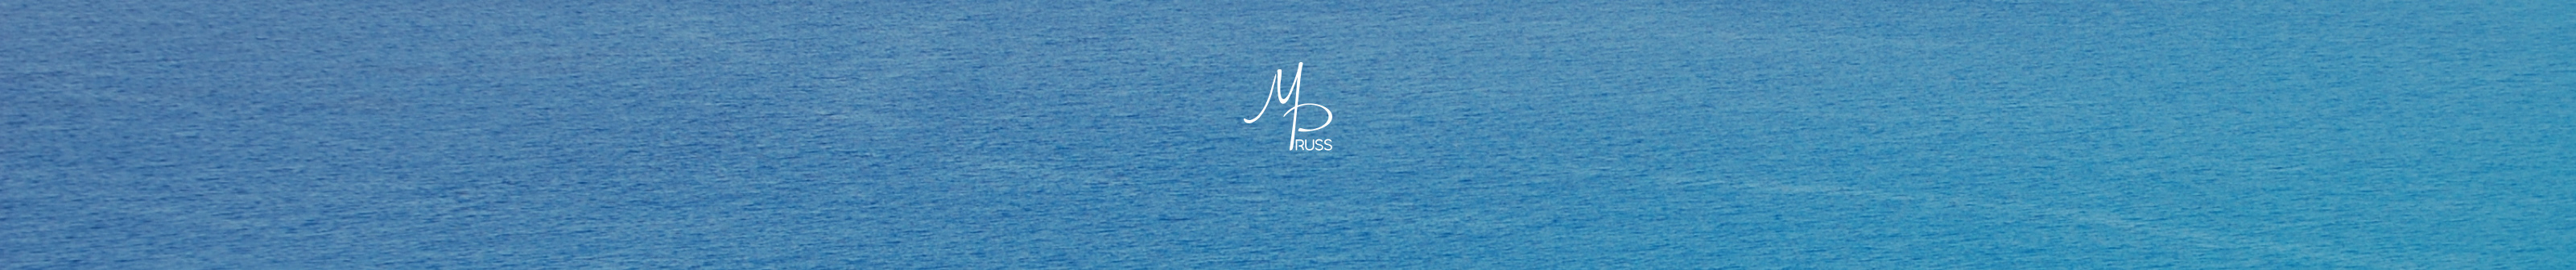 Marina Pruss's profile banner